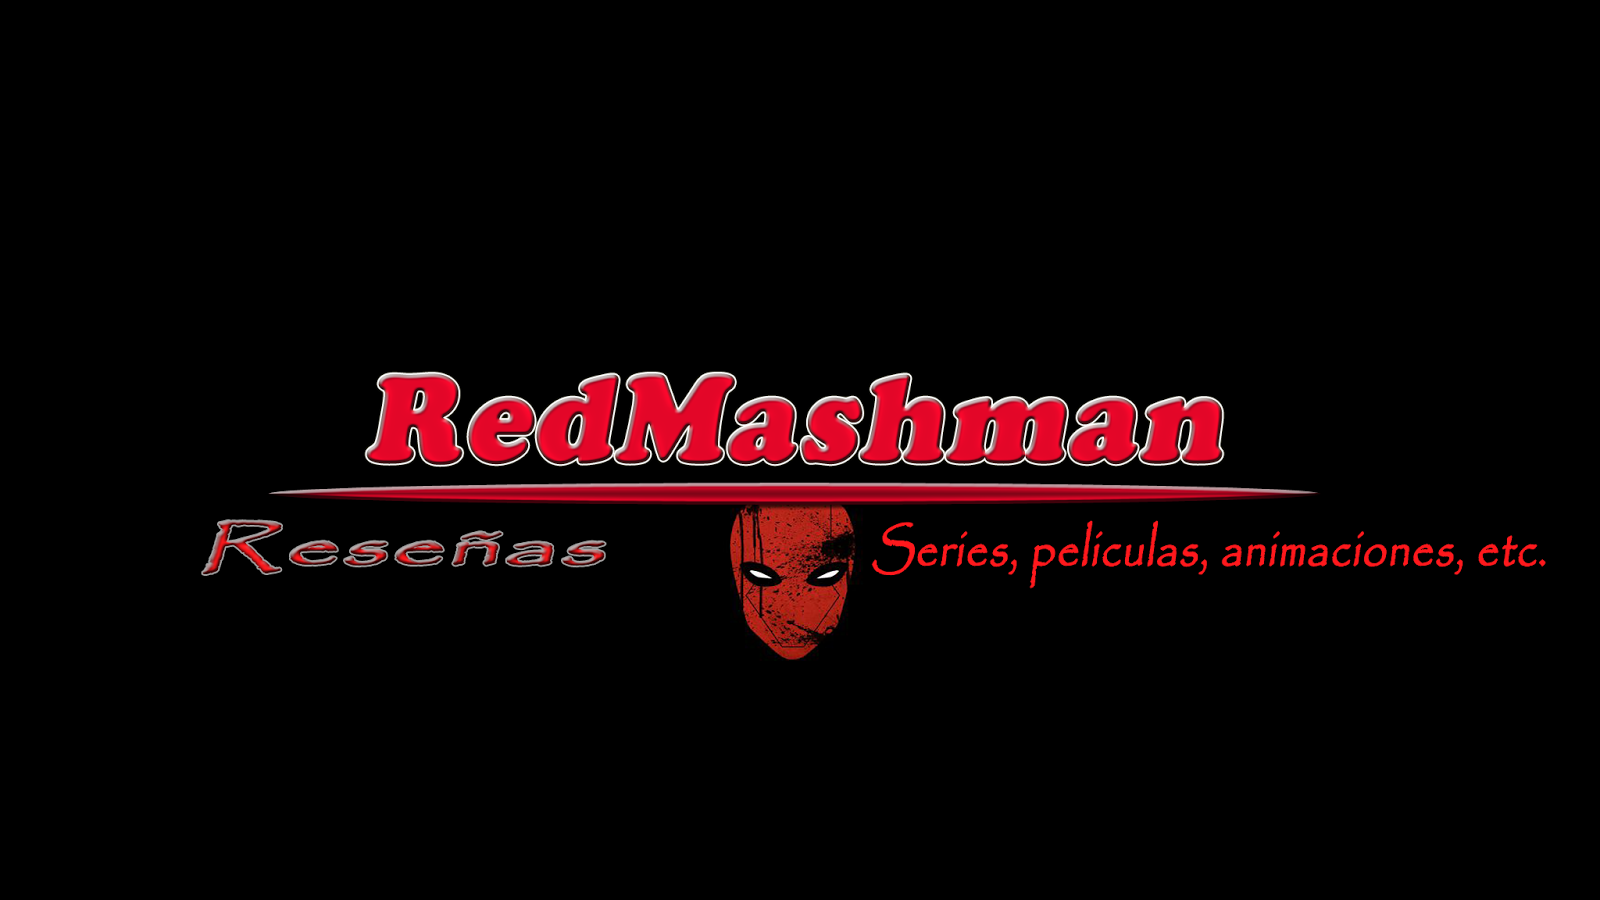 RedMashman